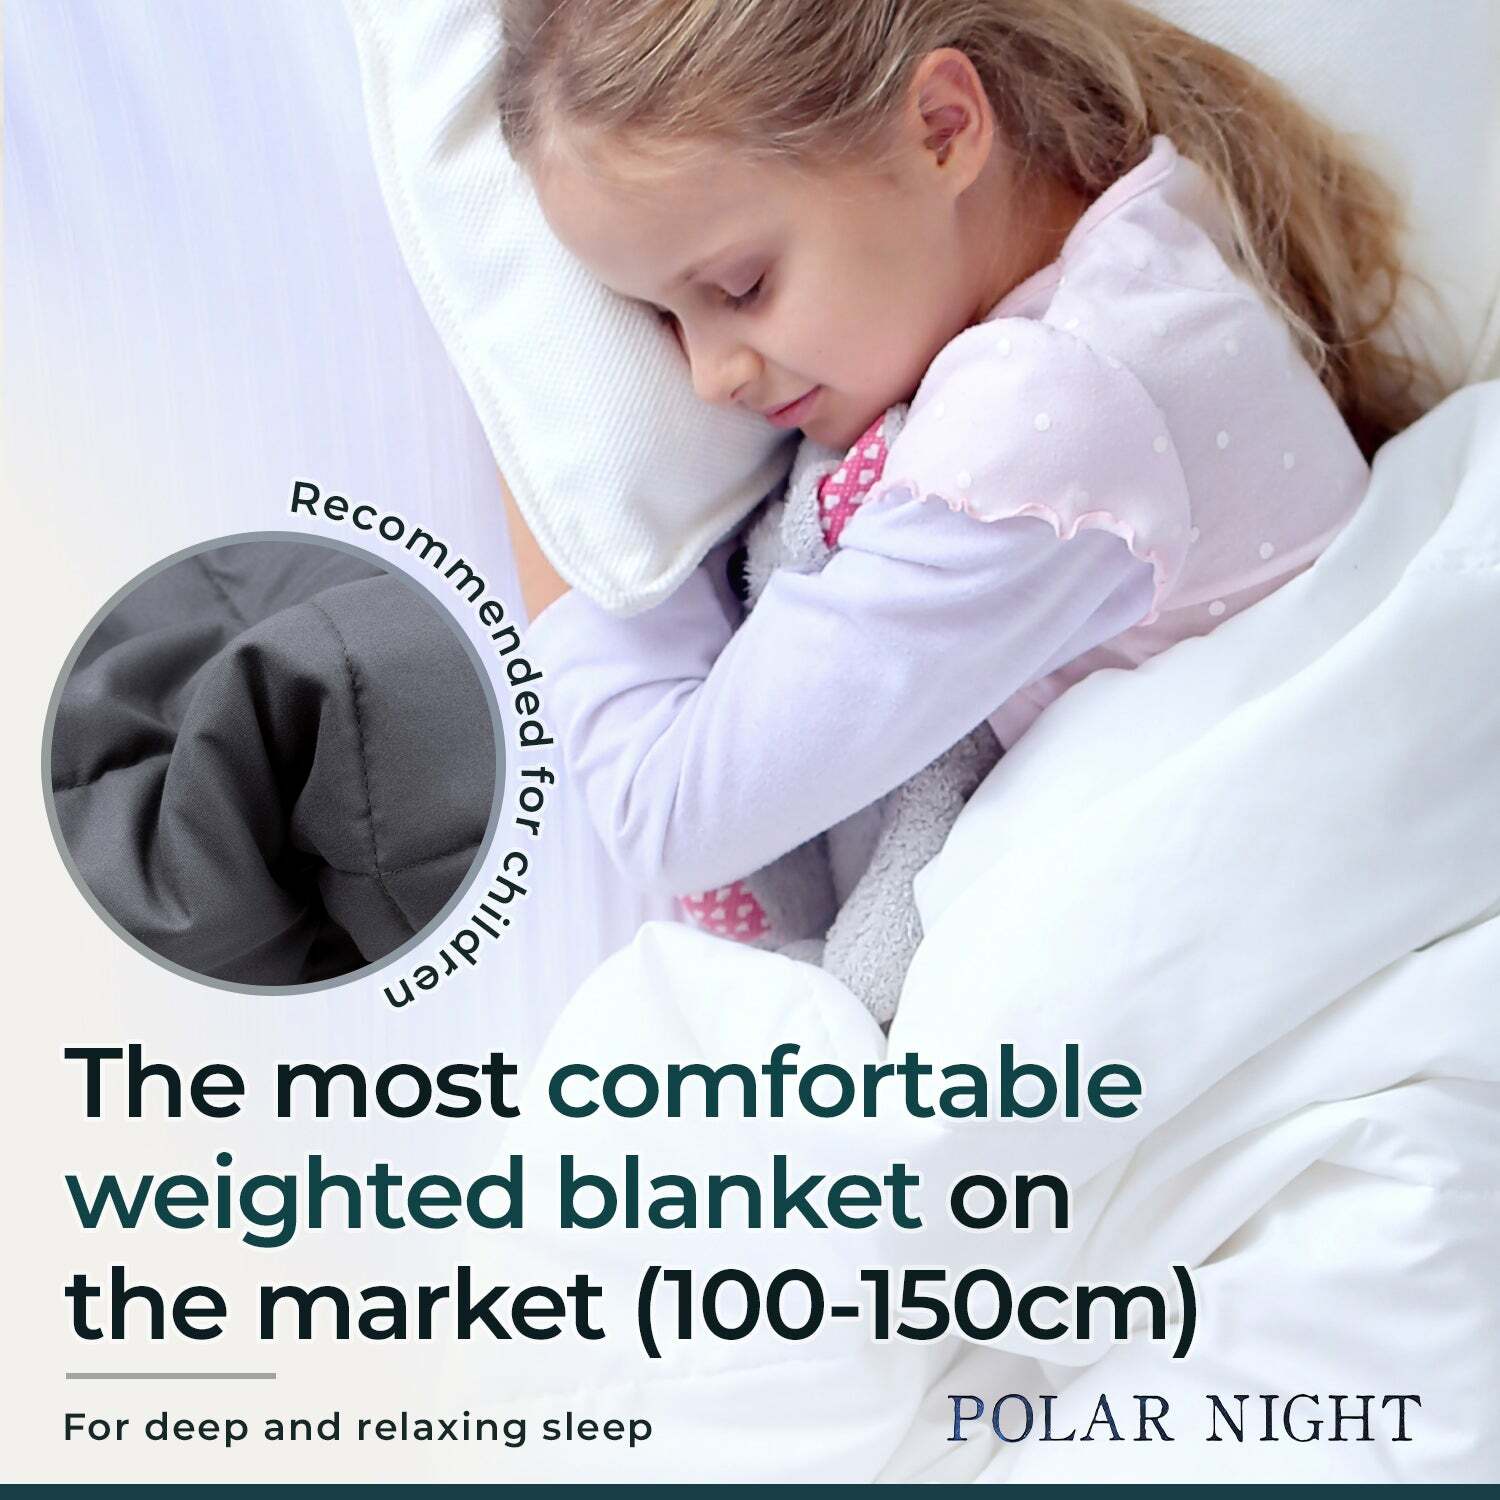 Polar Night Weighted Blanket 3-5kg, 100x150cm - 49,90 EUR - Polar Night